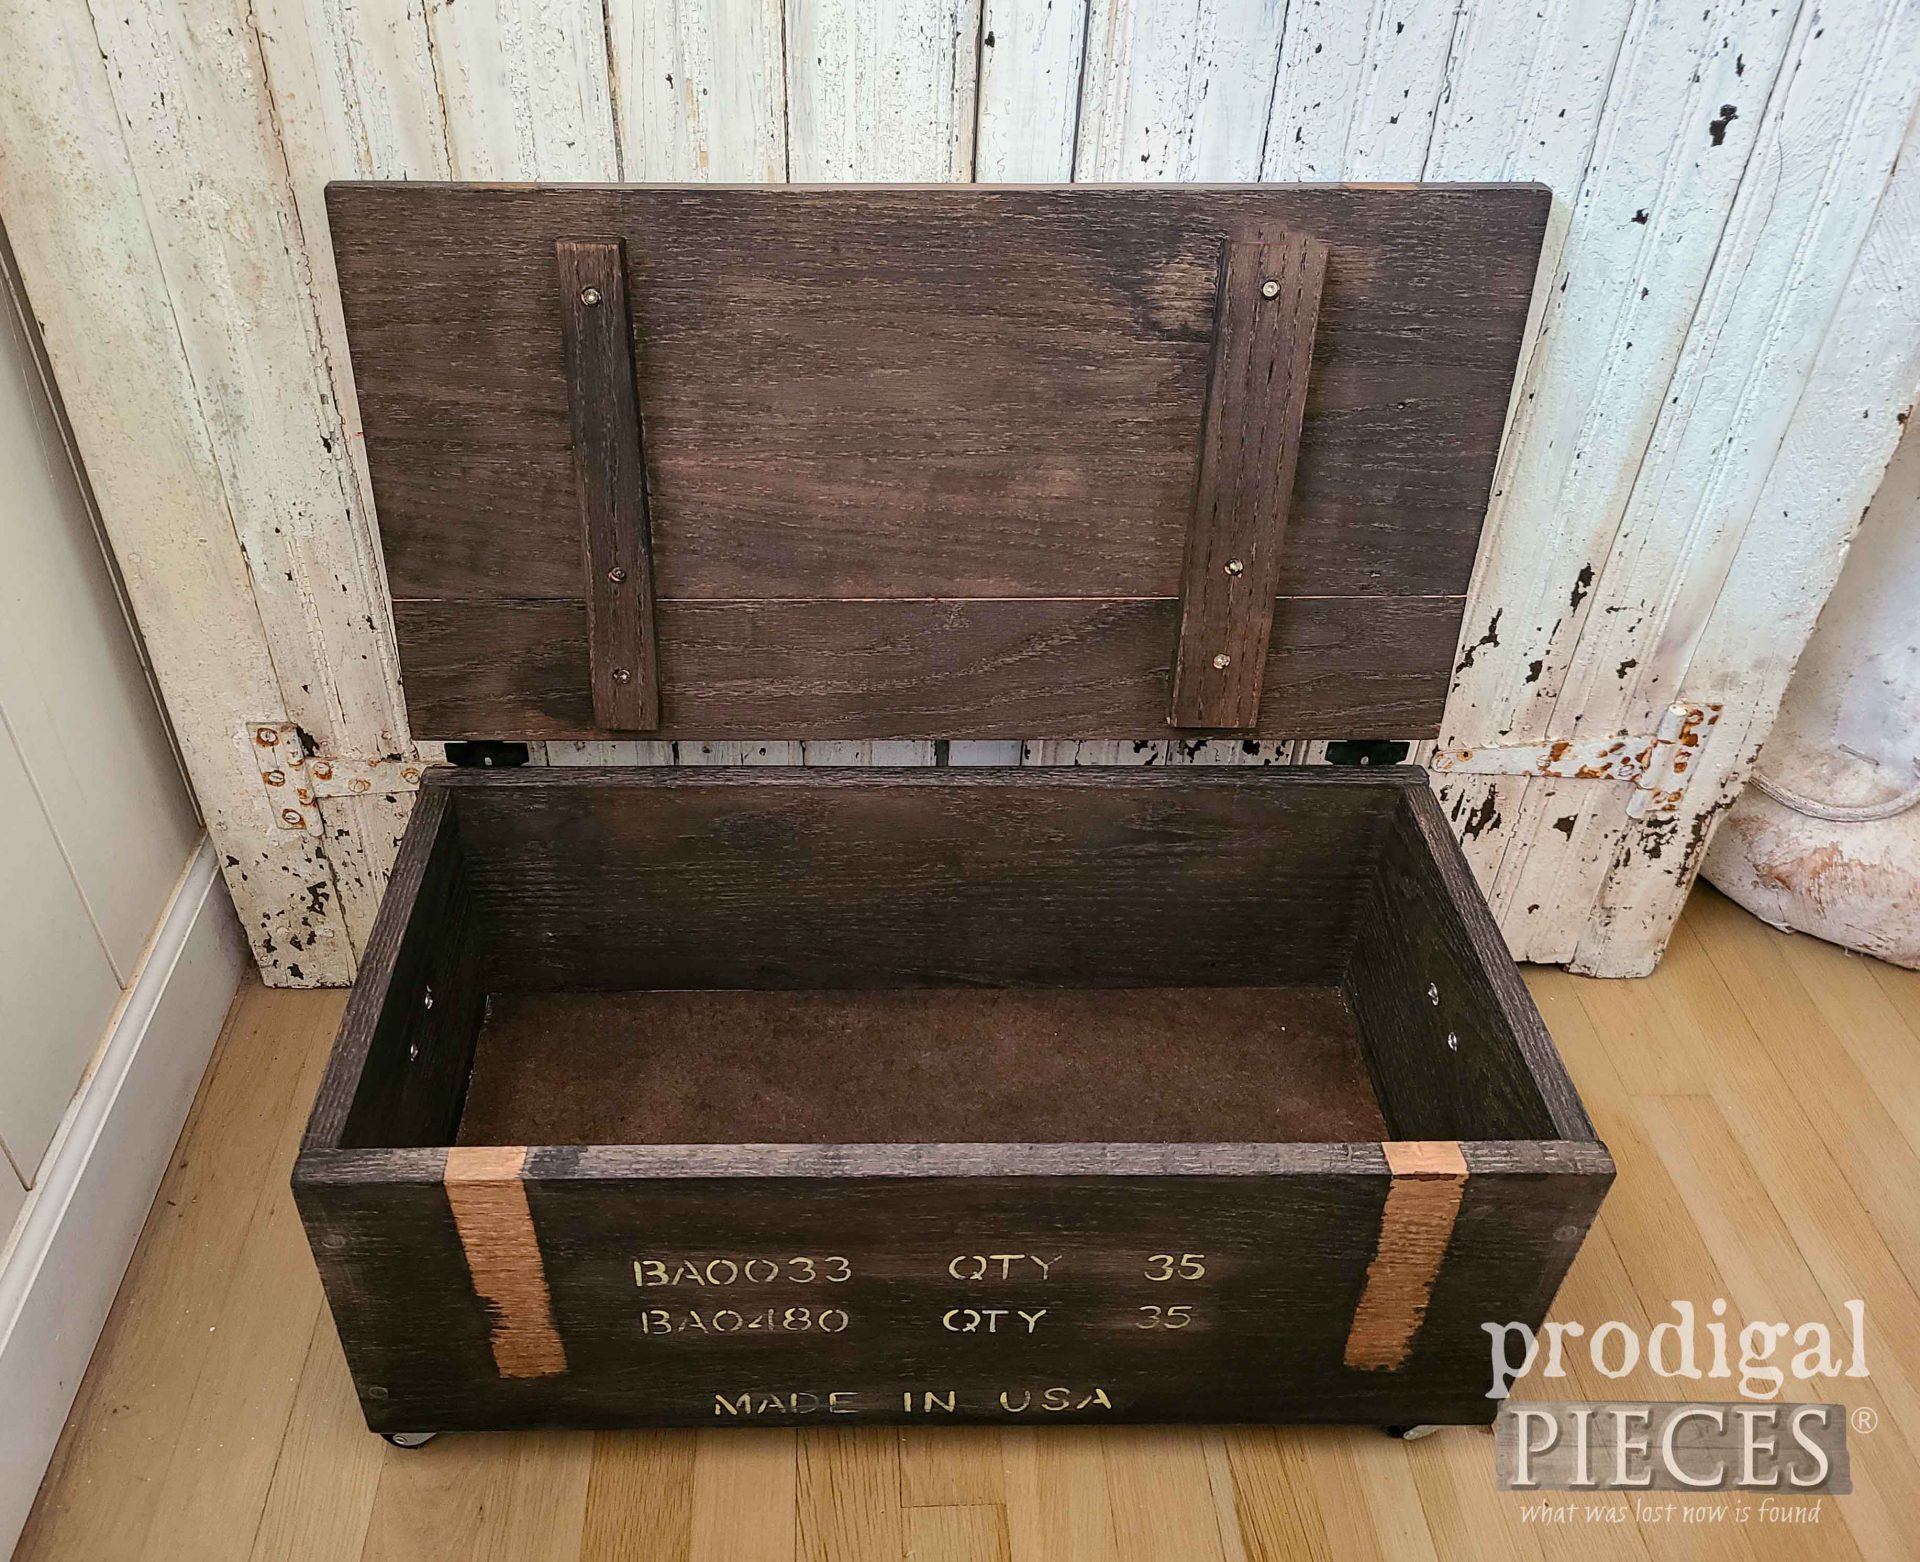 Inside DIY Ammo Box built by Larissa of Prodigal Pieces | prodigalpieces.com #prodigalpieces #hadnmade #upcycled #farmhouse #storage